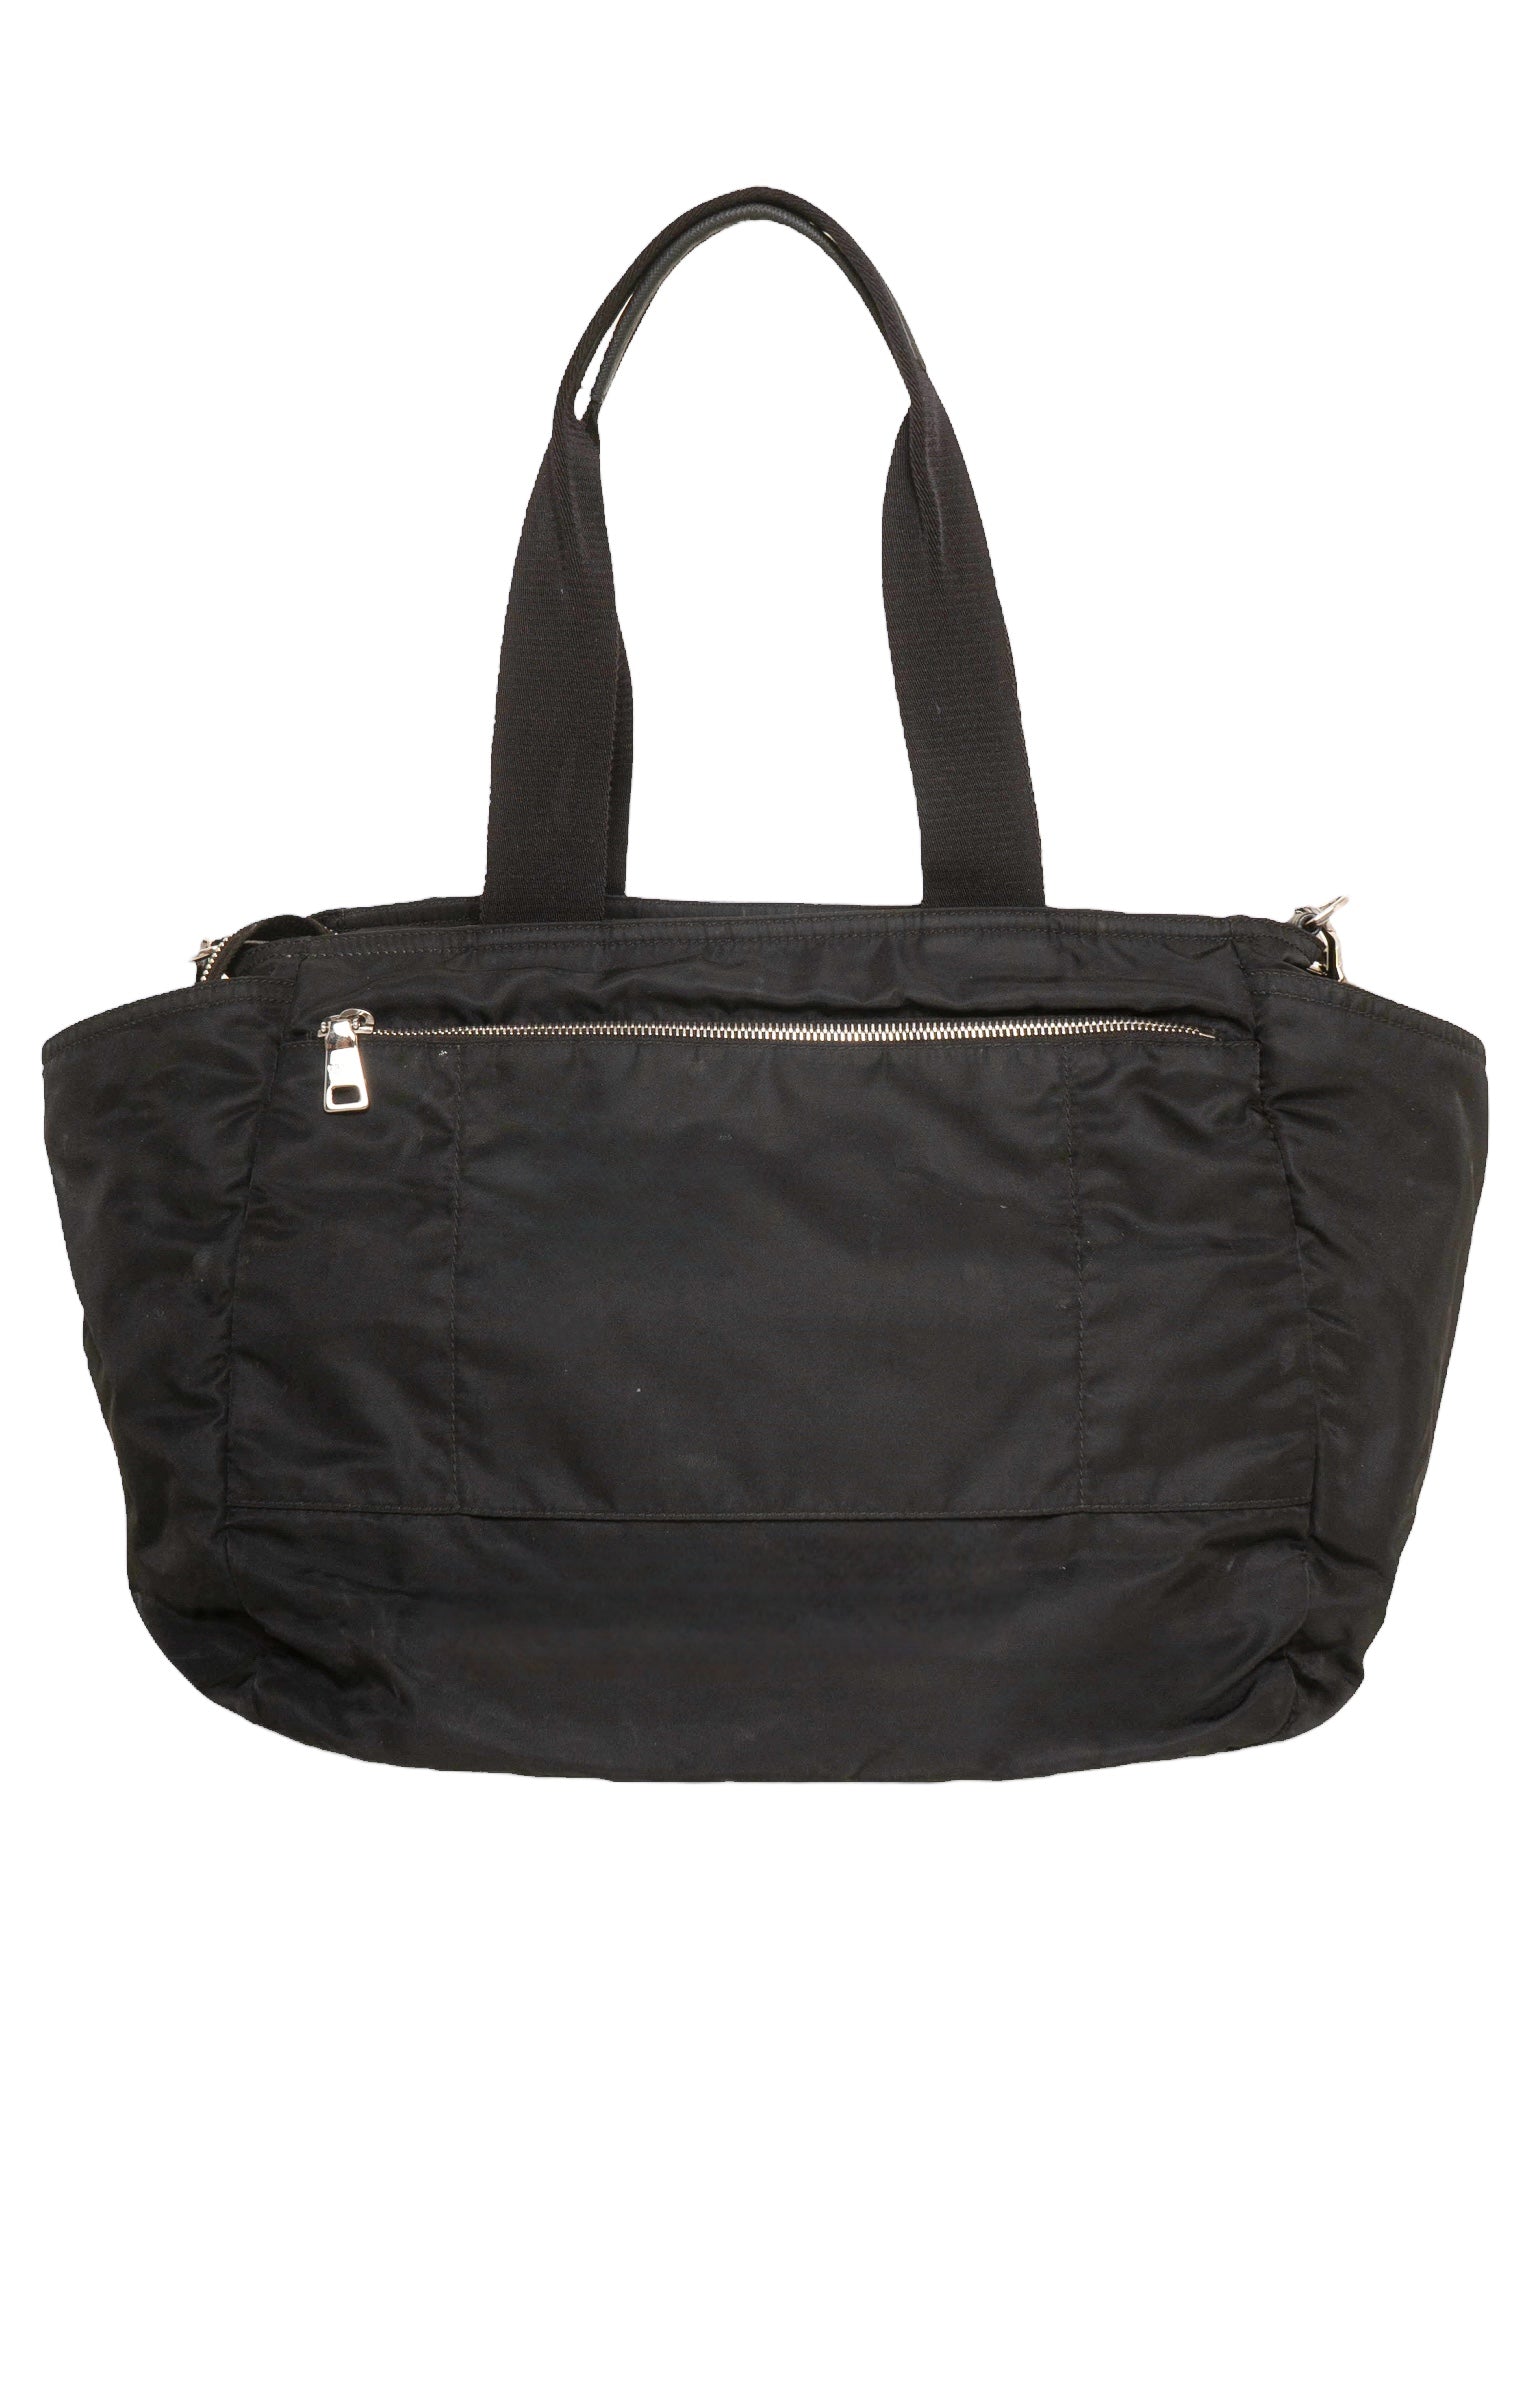 PRADA Bag Size: 17" x 7.75" x 11"; 9.25" drop handles